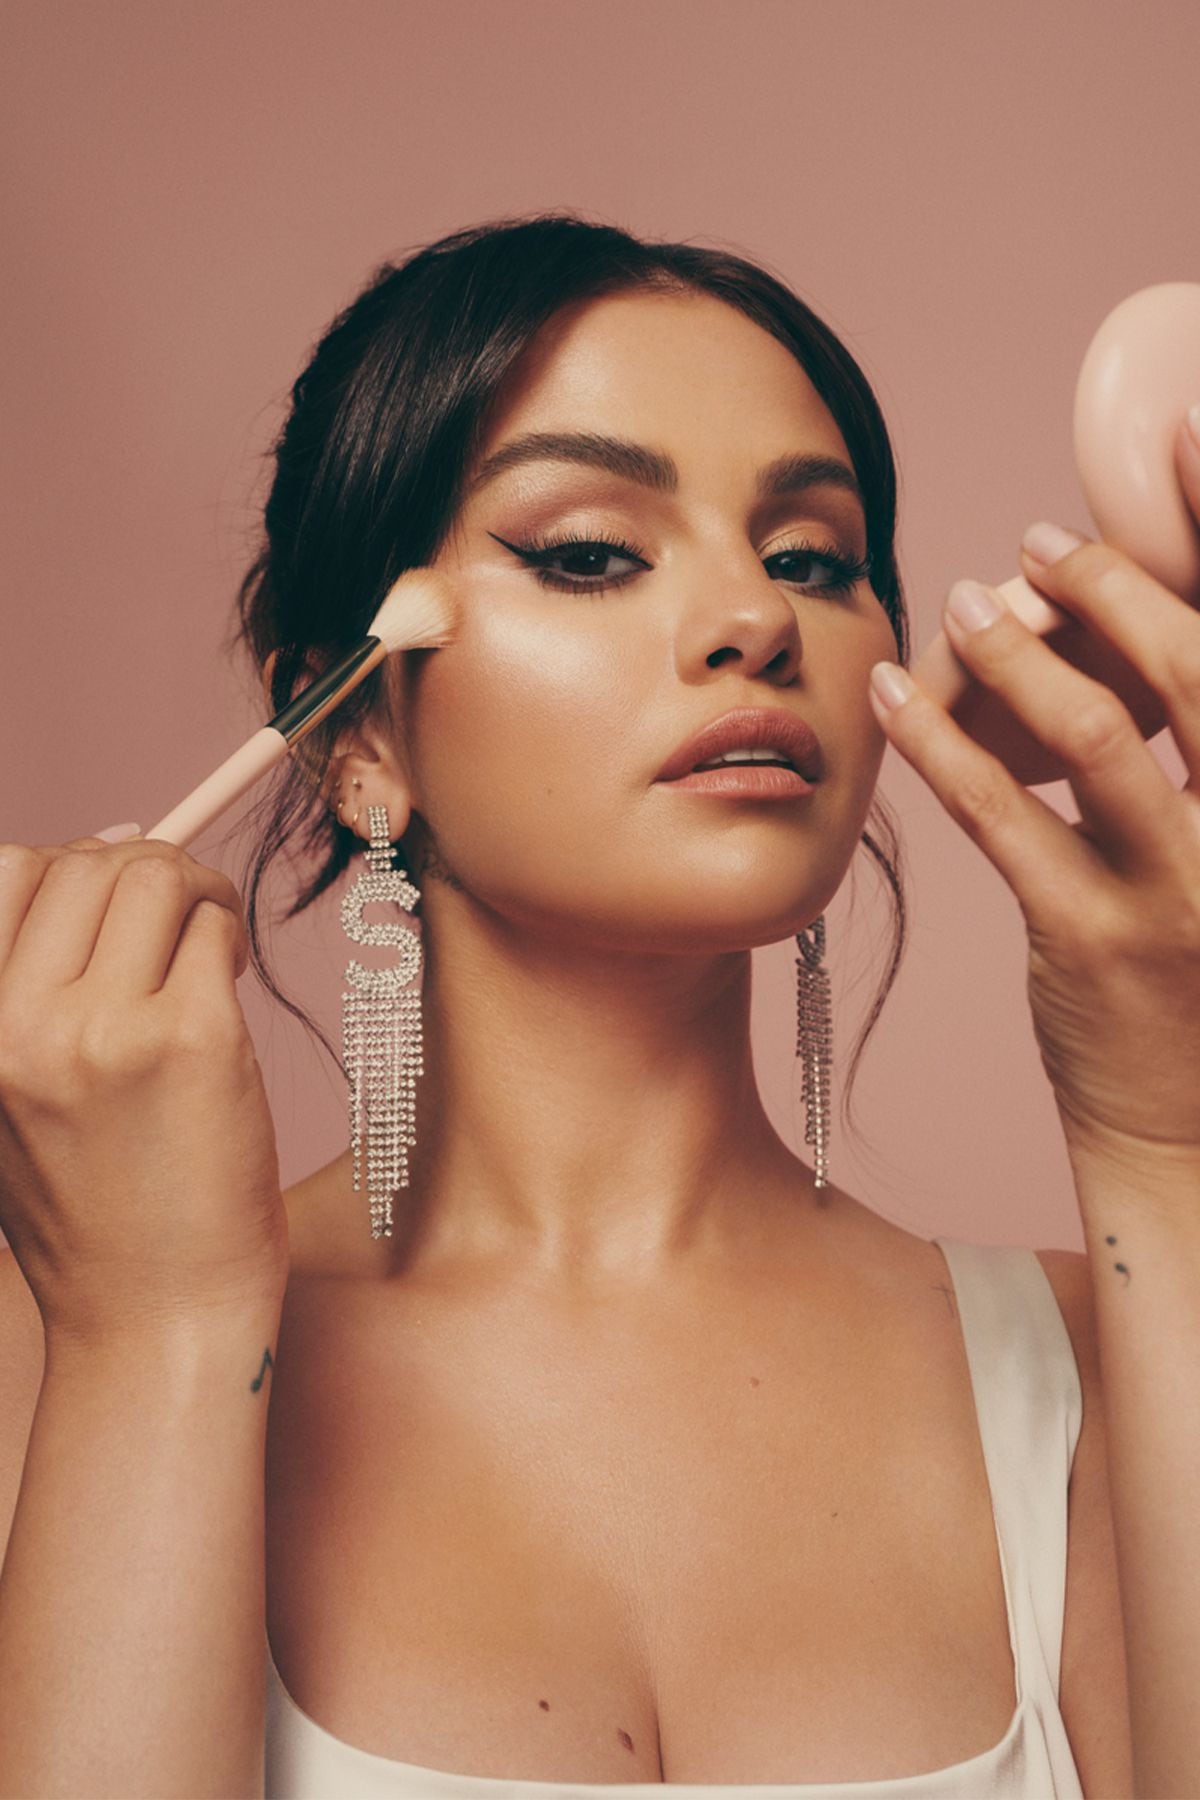 Selena Gomez’s Rare Beauty Exploring an IPO or Sale as Net Sales Cross $400 Million